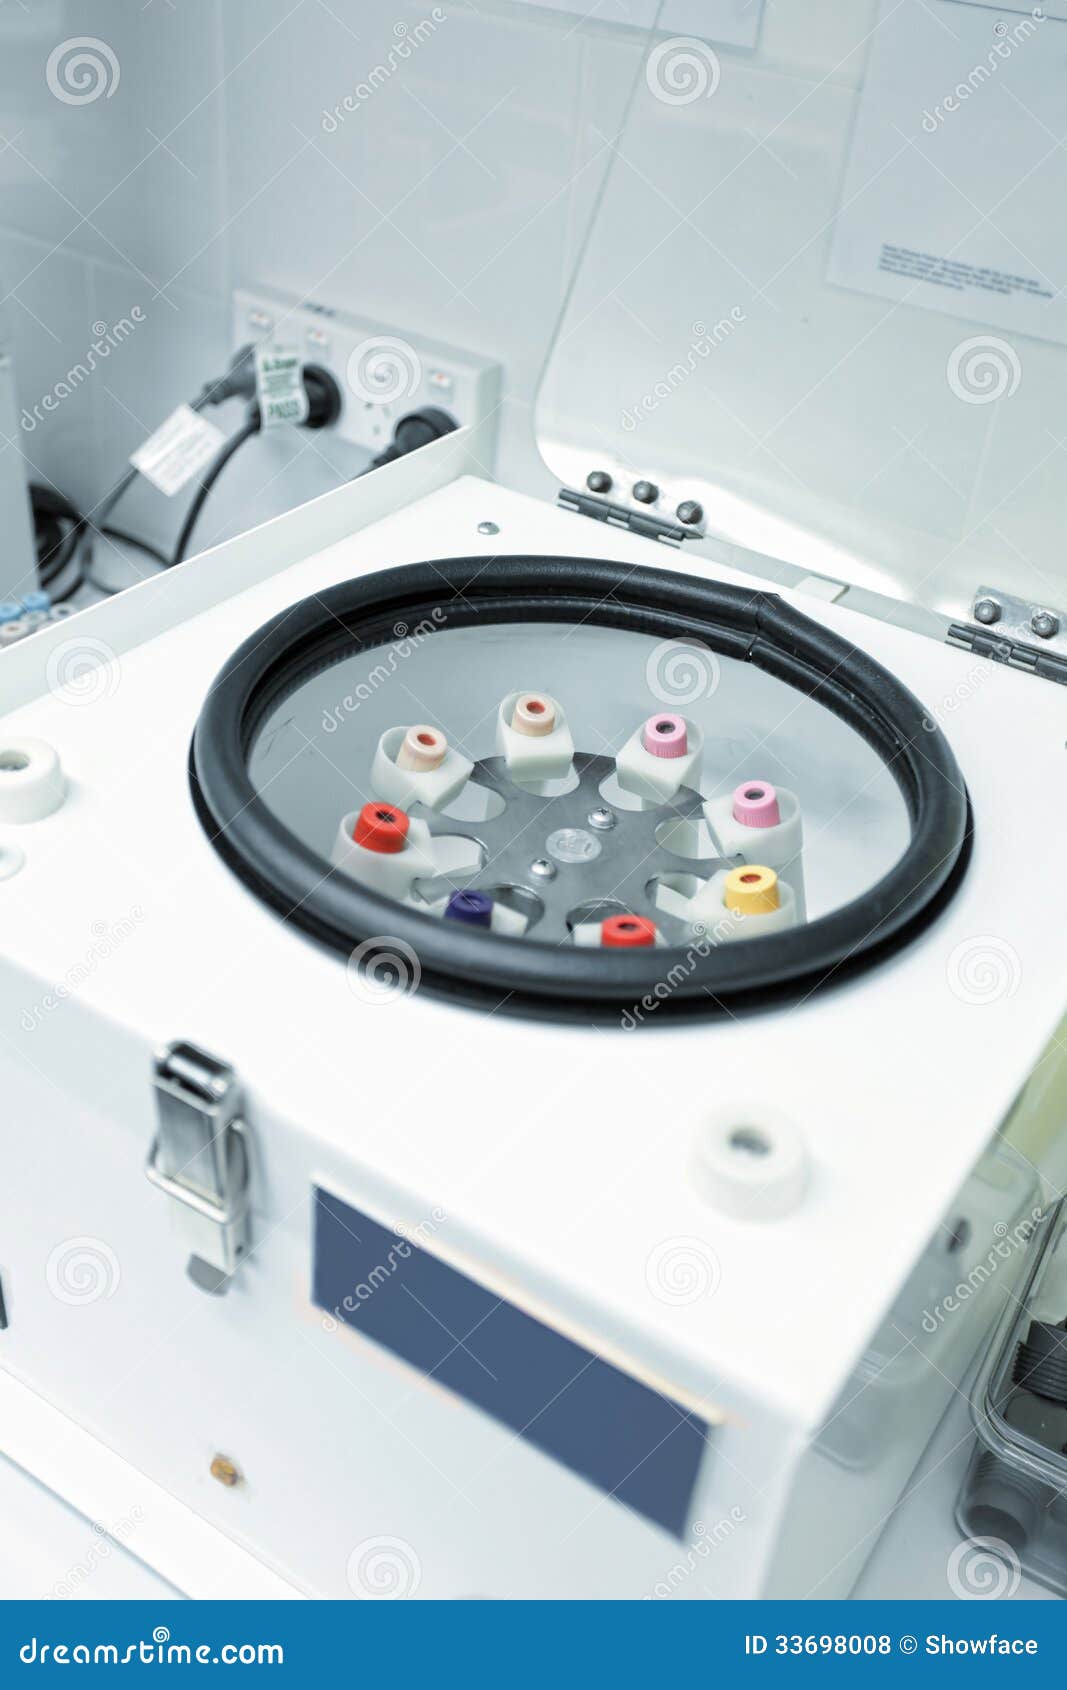 centrifuge with pathology blood tubes for spinning